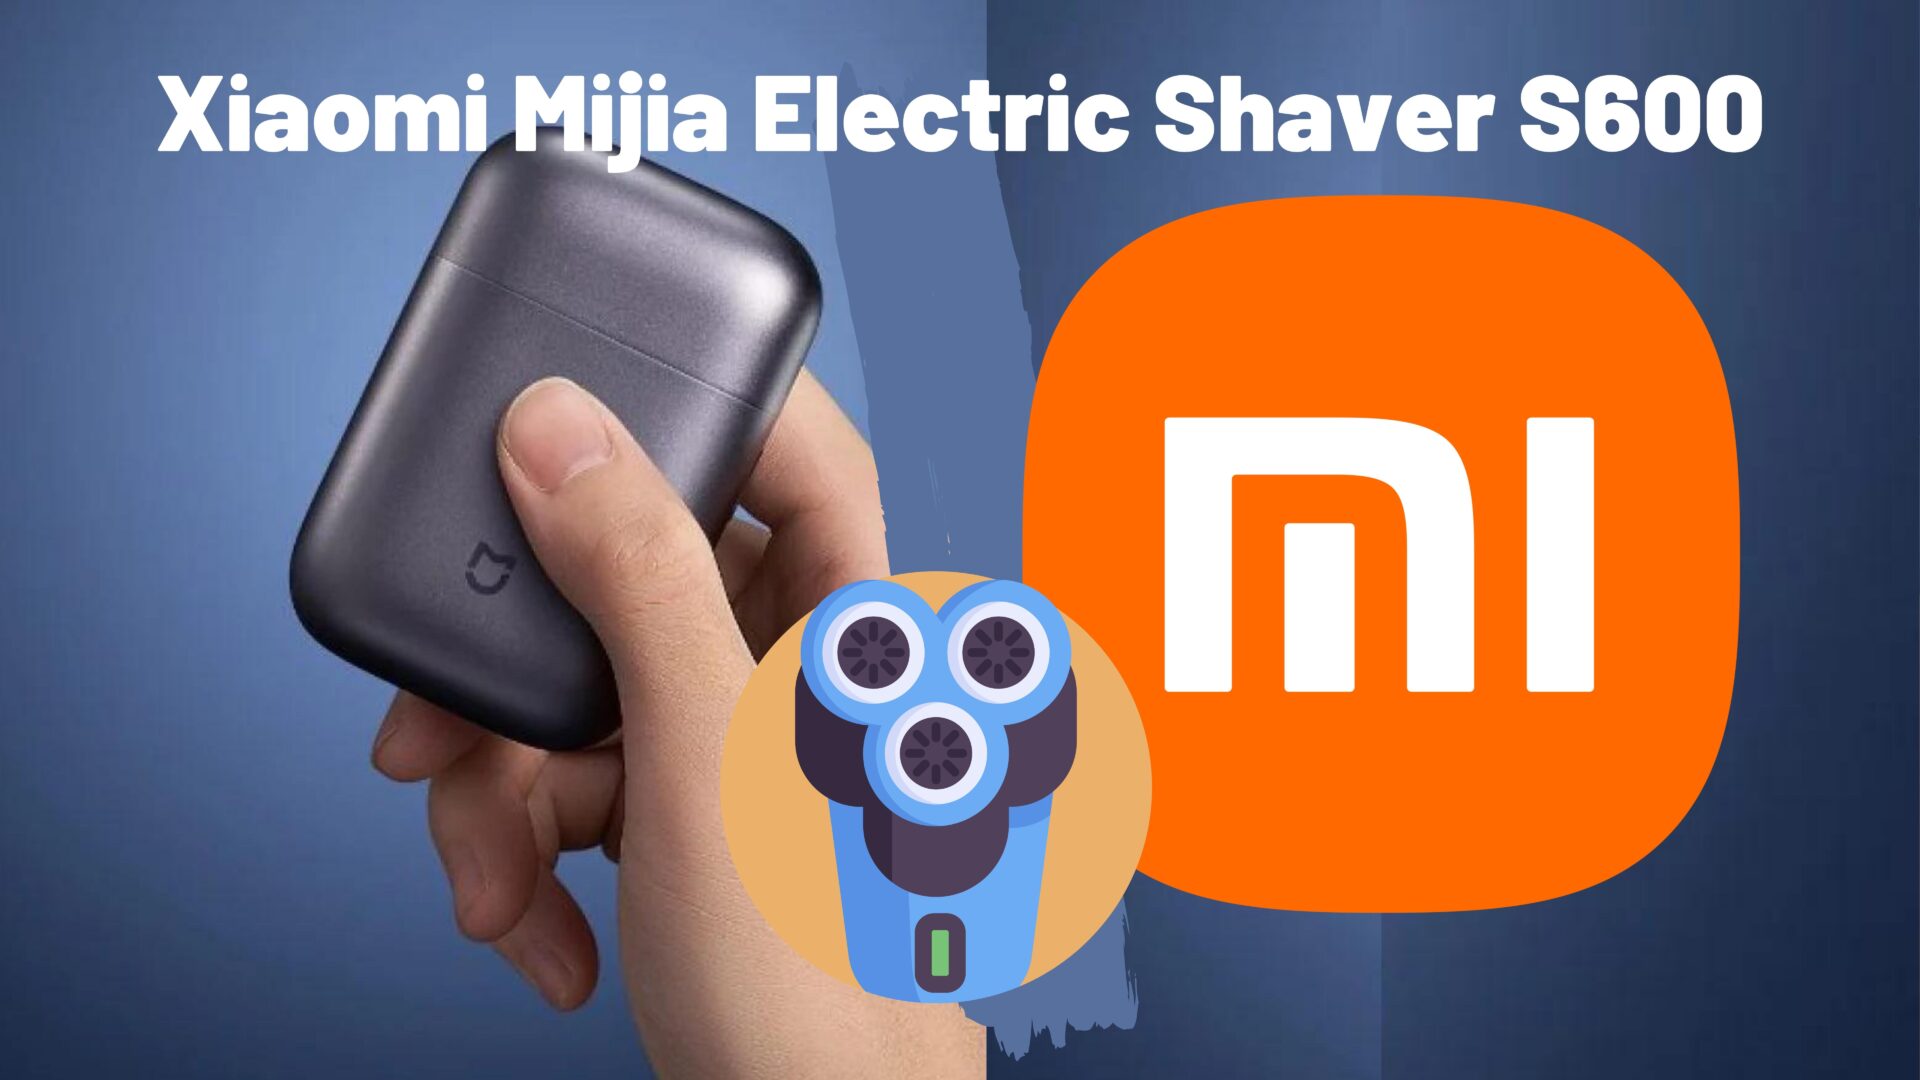 Xiaomi Mijia Electric Shaver S600